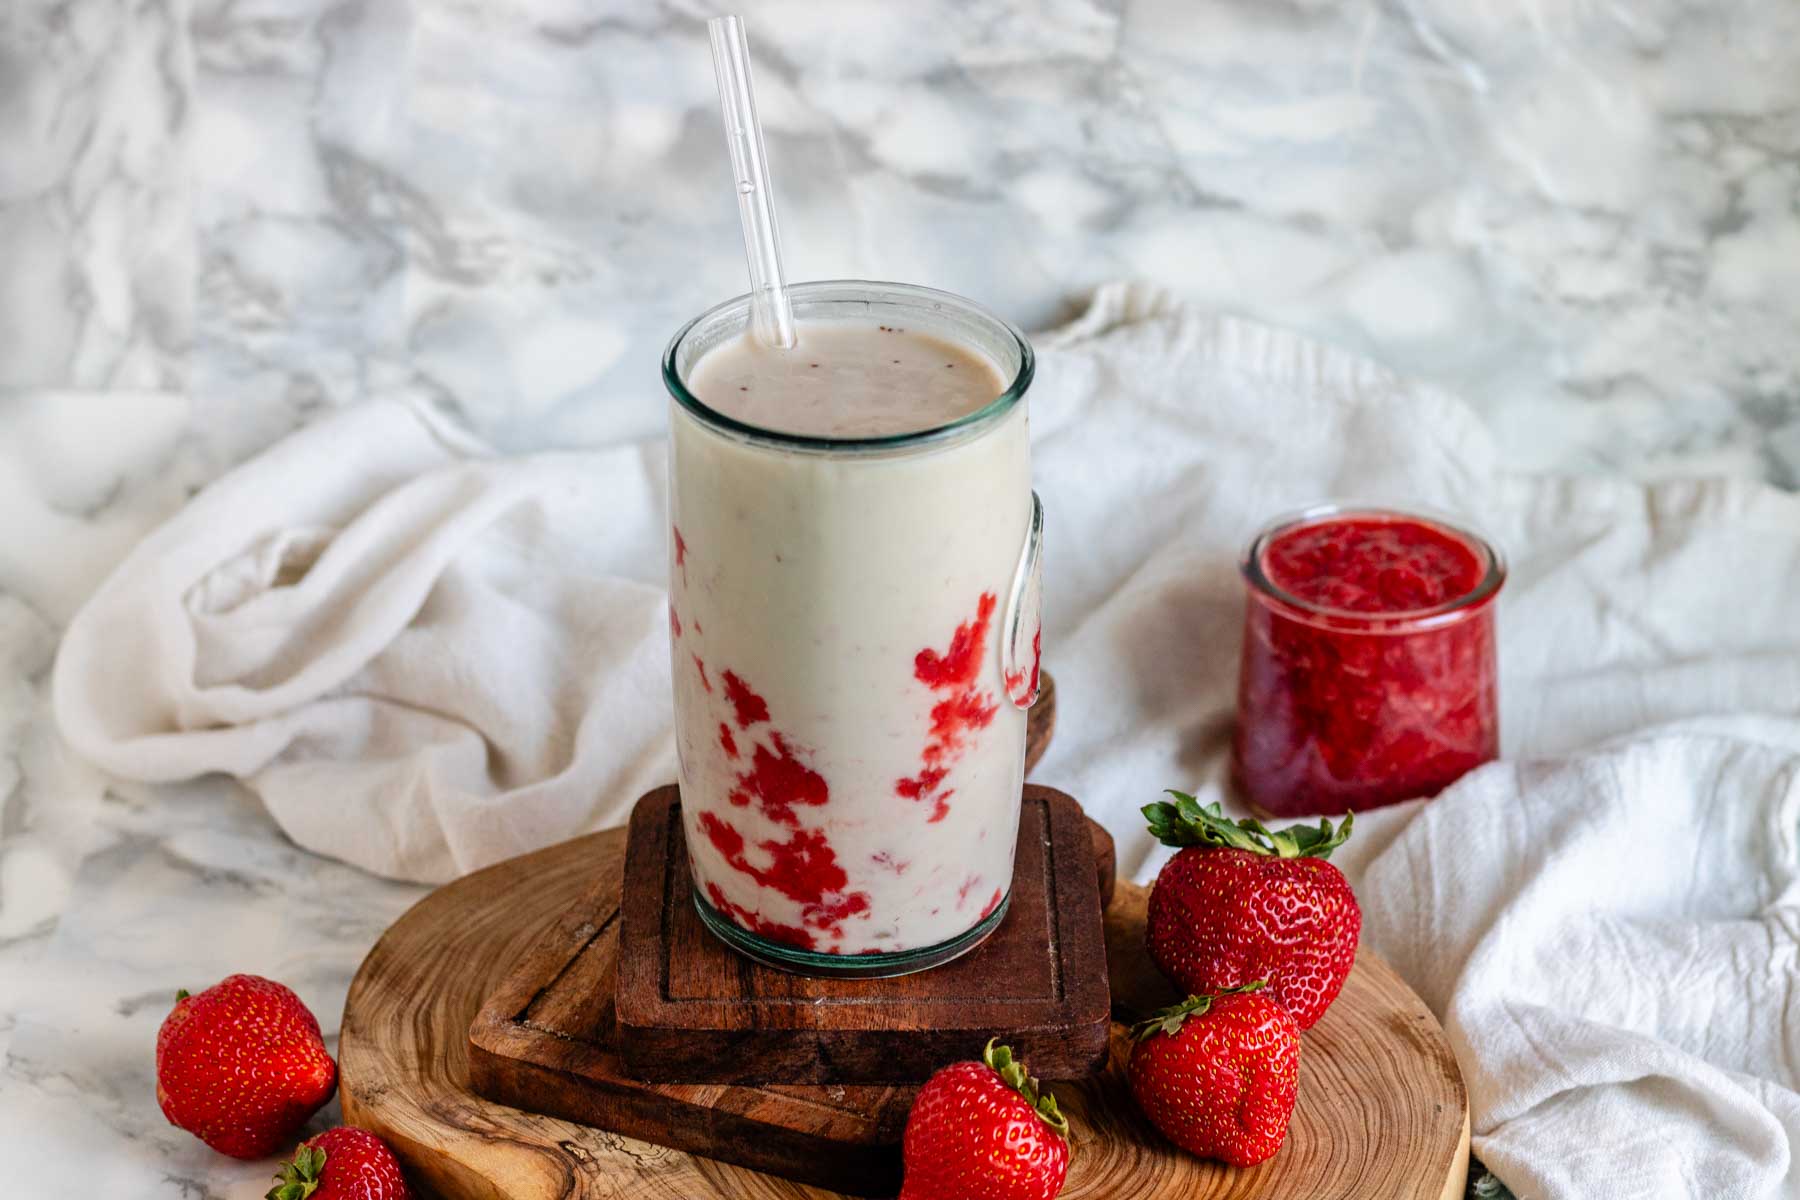 Vegan strawberry milk in a glass.